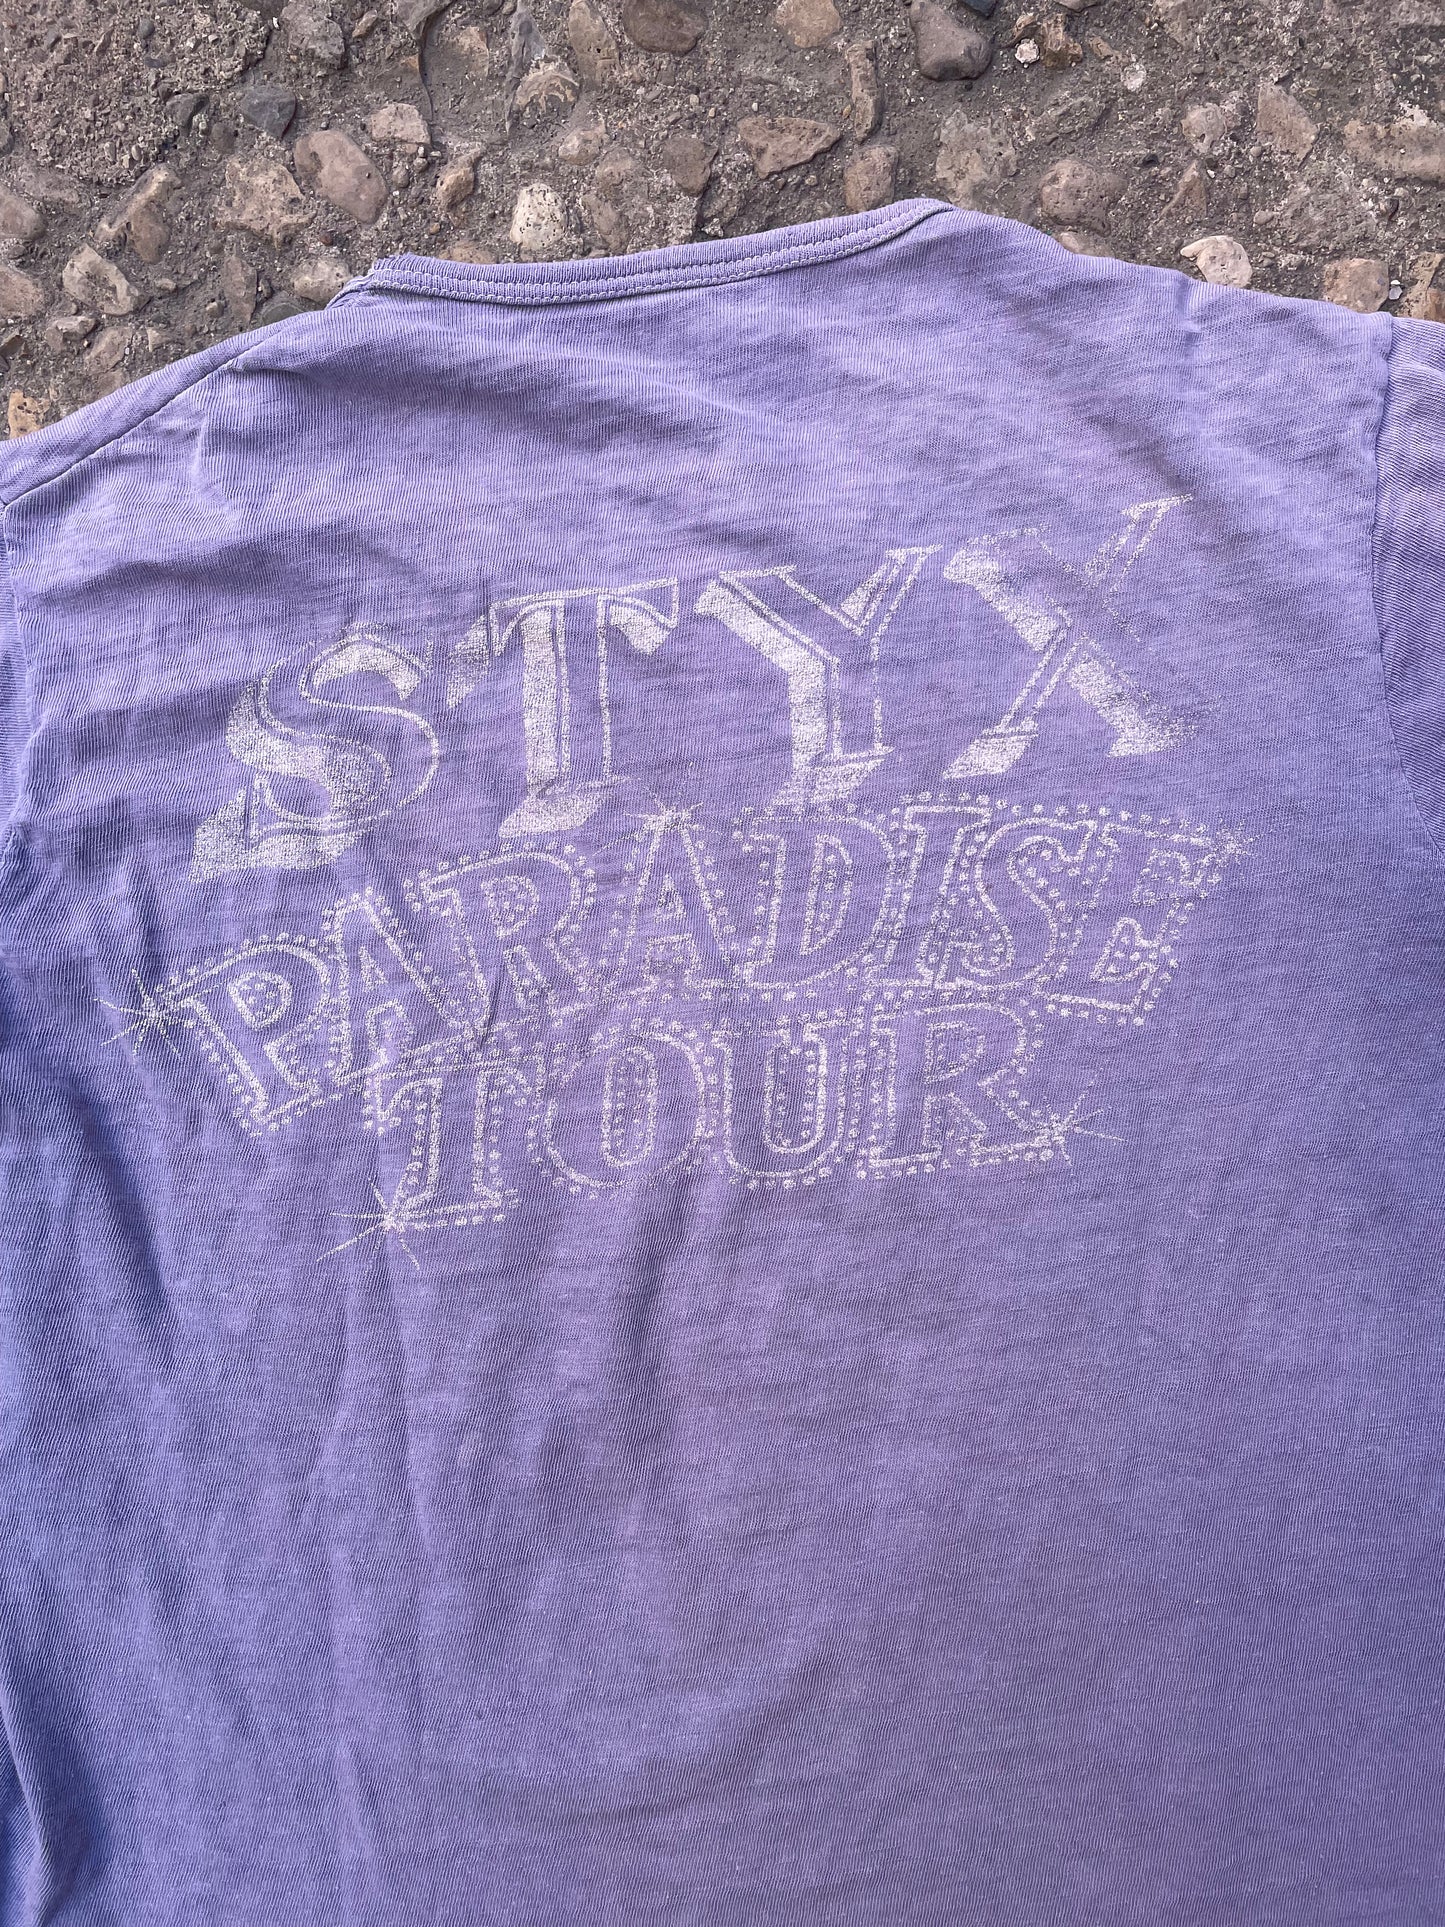 1981 Styx Paradise Tour Graphic Band T-Shirt - M